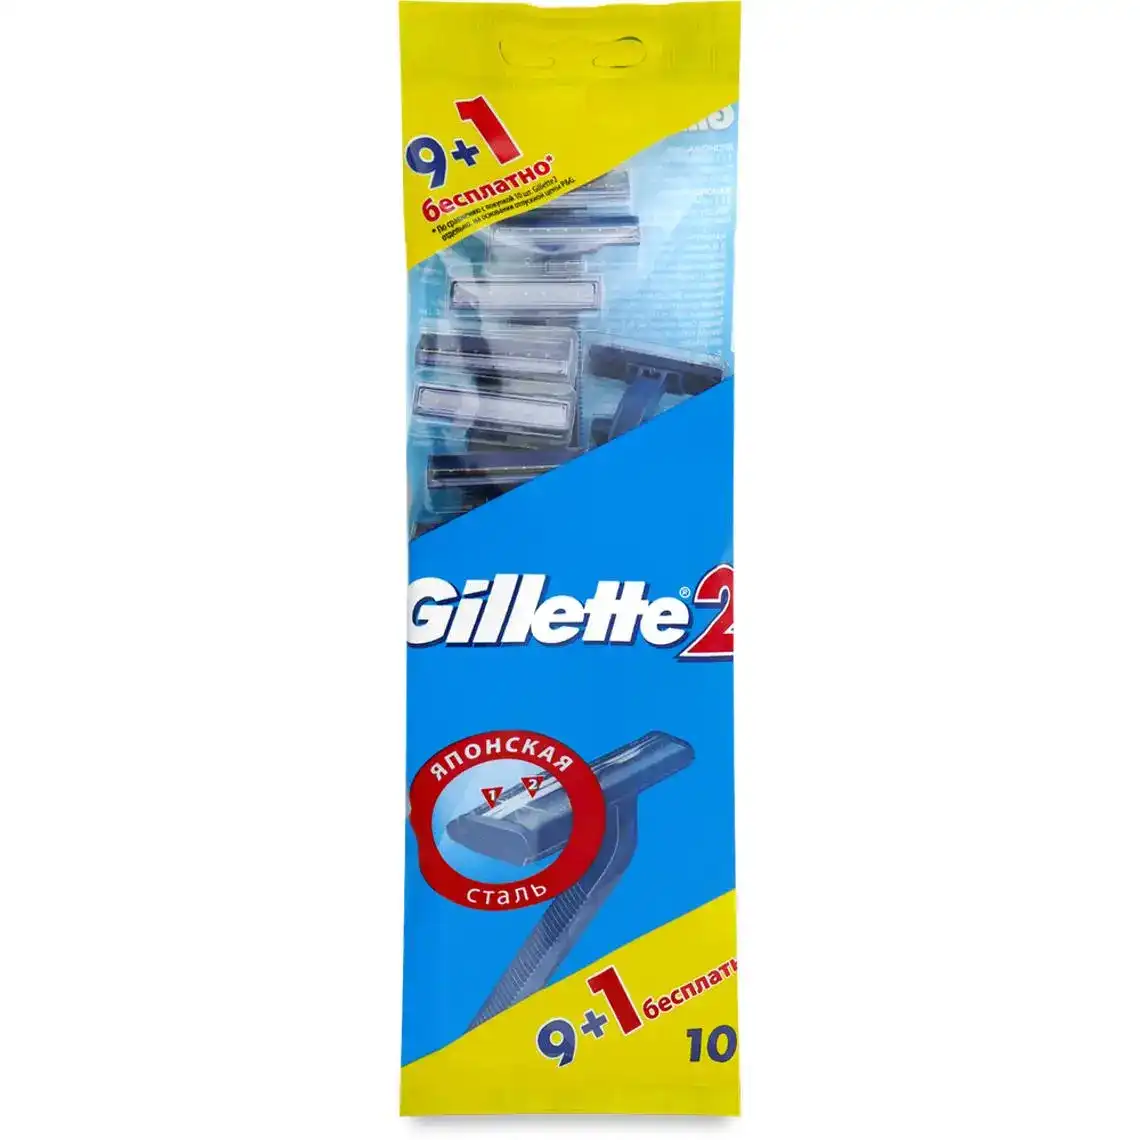 Станки Gillette 2 для бритья 10 шт.